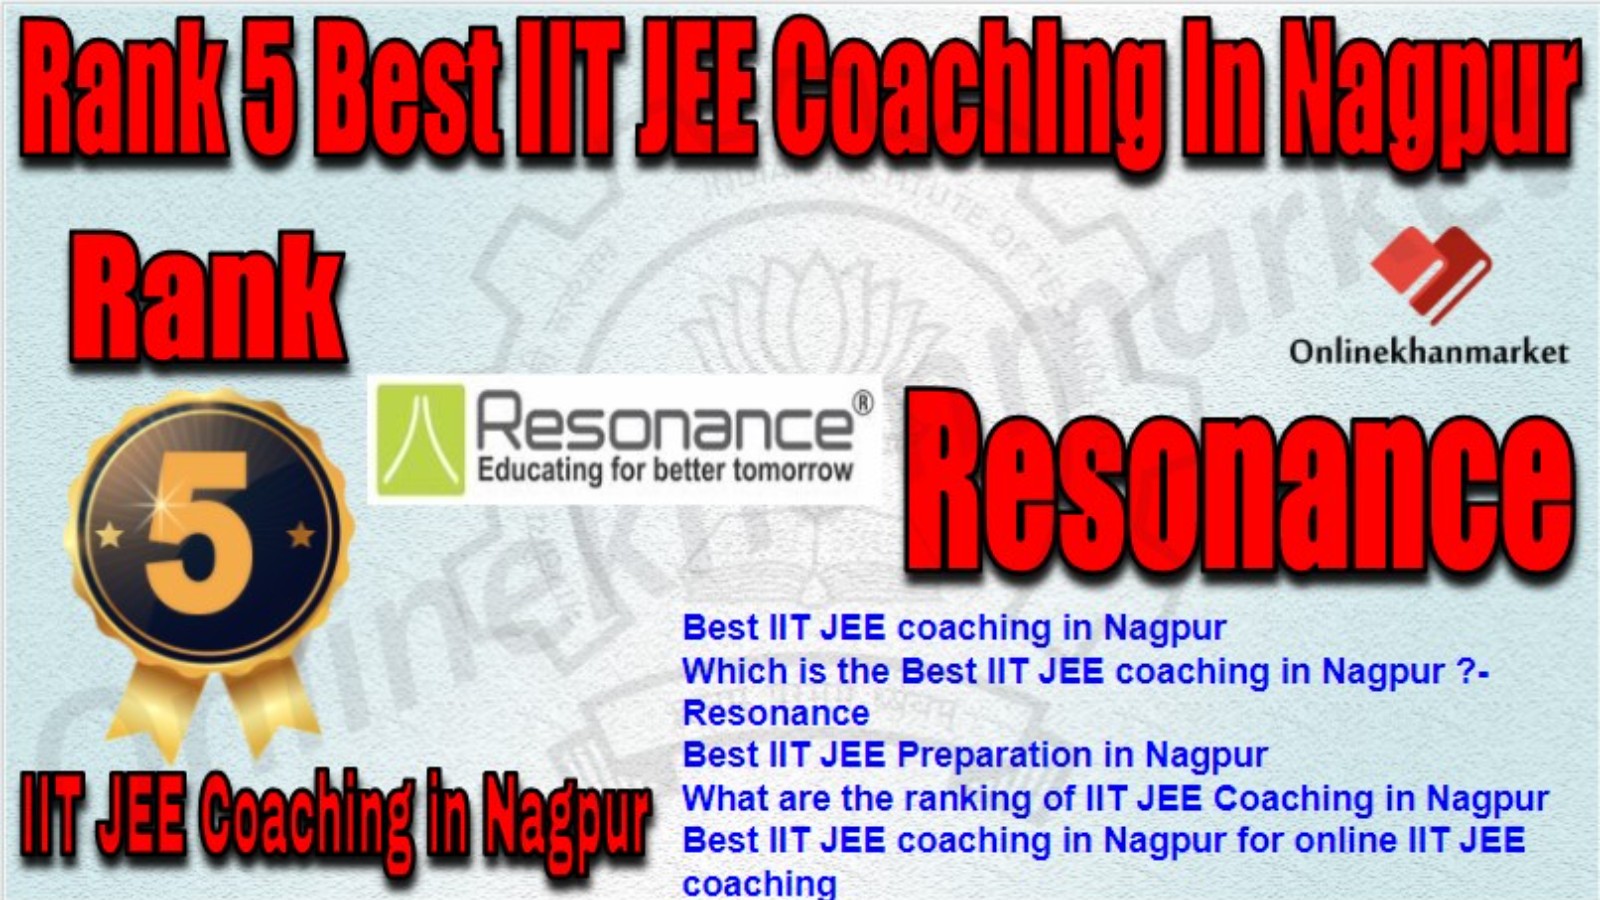 Rank 5 Best IIT JEE Coaching in nagpur 